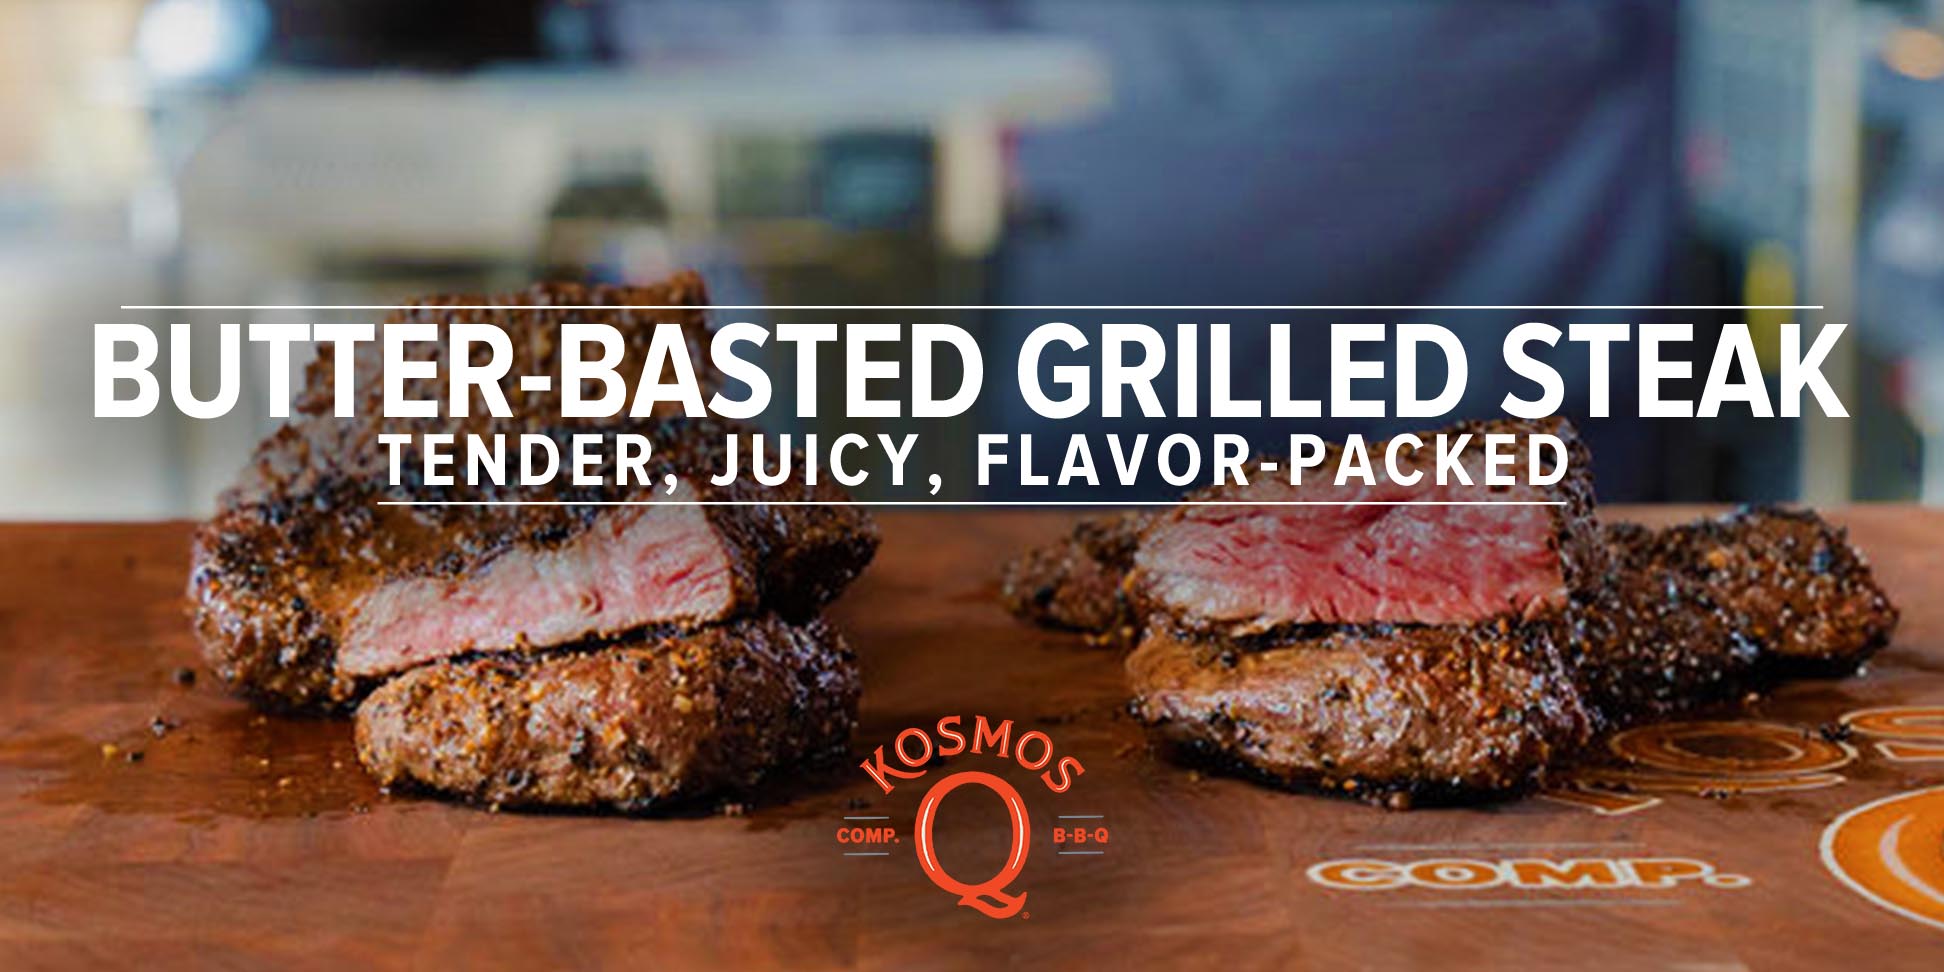 The BACONATOR Smash Burger Recipe! - Kosmos Q BBQ Products & Supplies